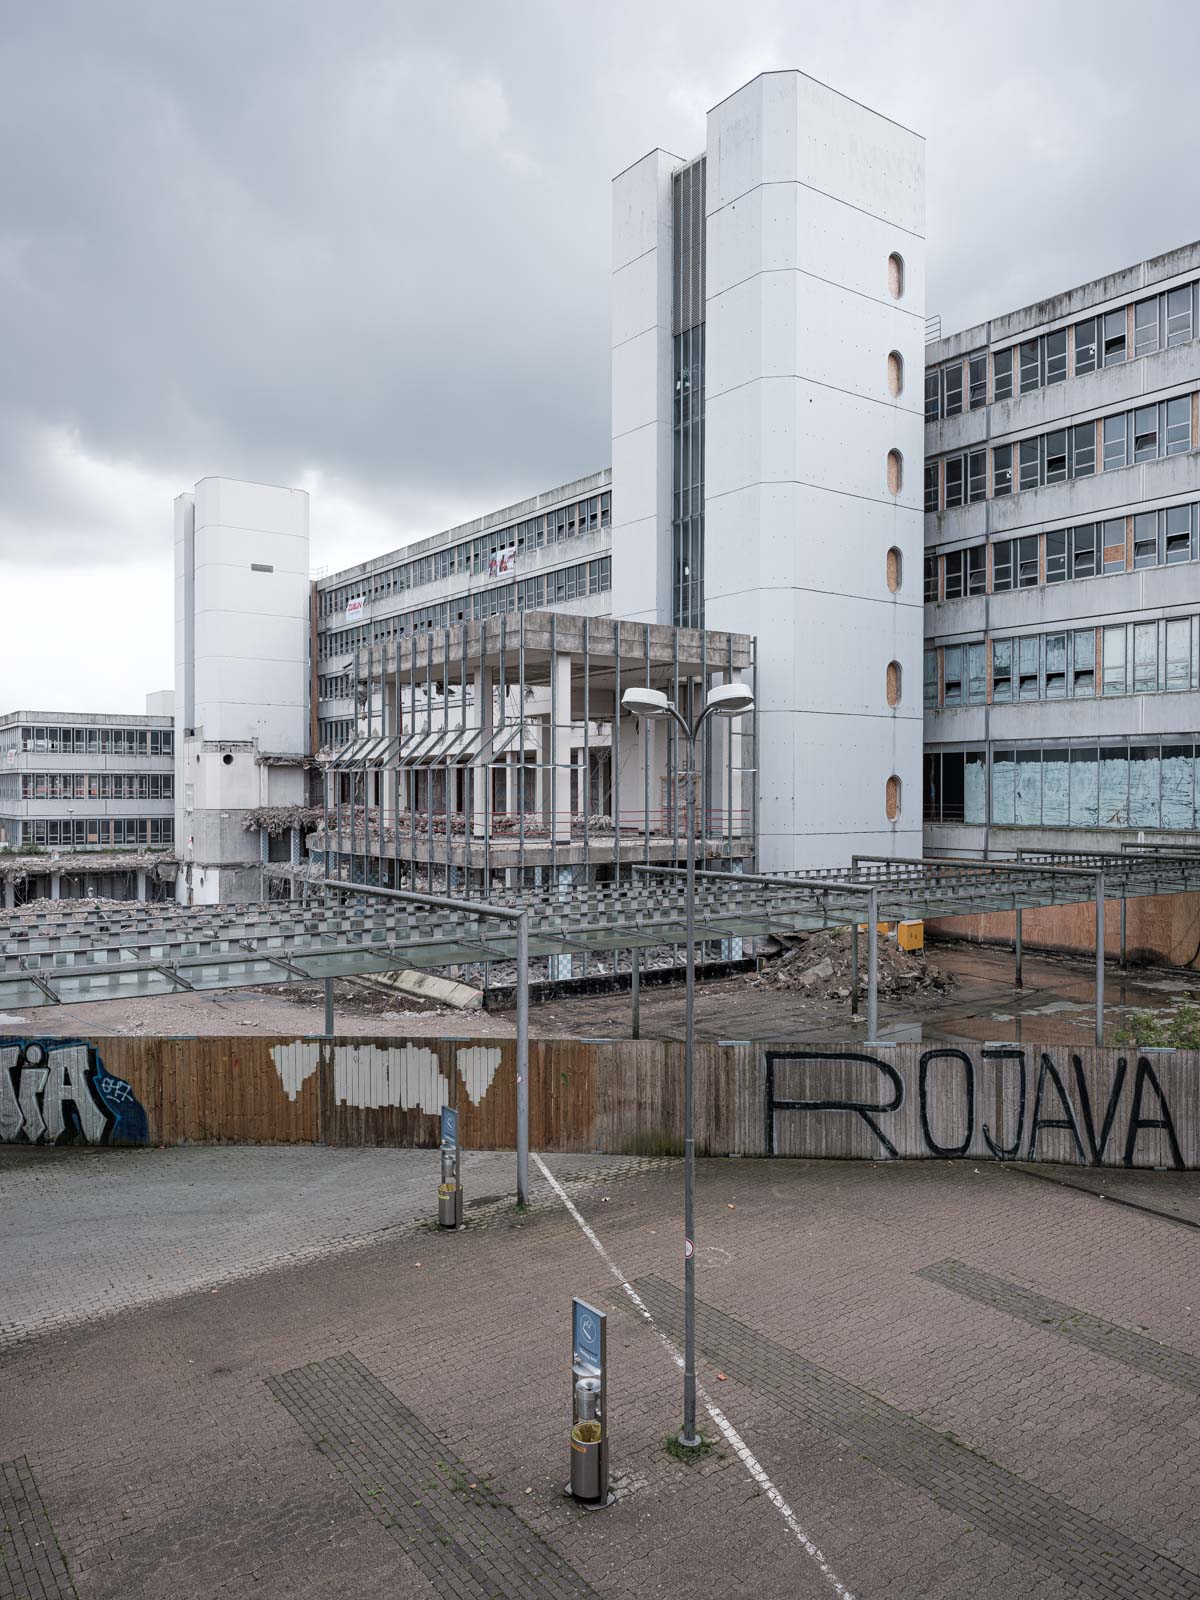 End of an era. Demolition of the canteen of Bielefeld University in July 2020 (Bielefeld, Germany).